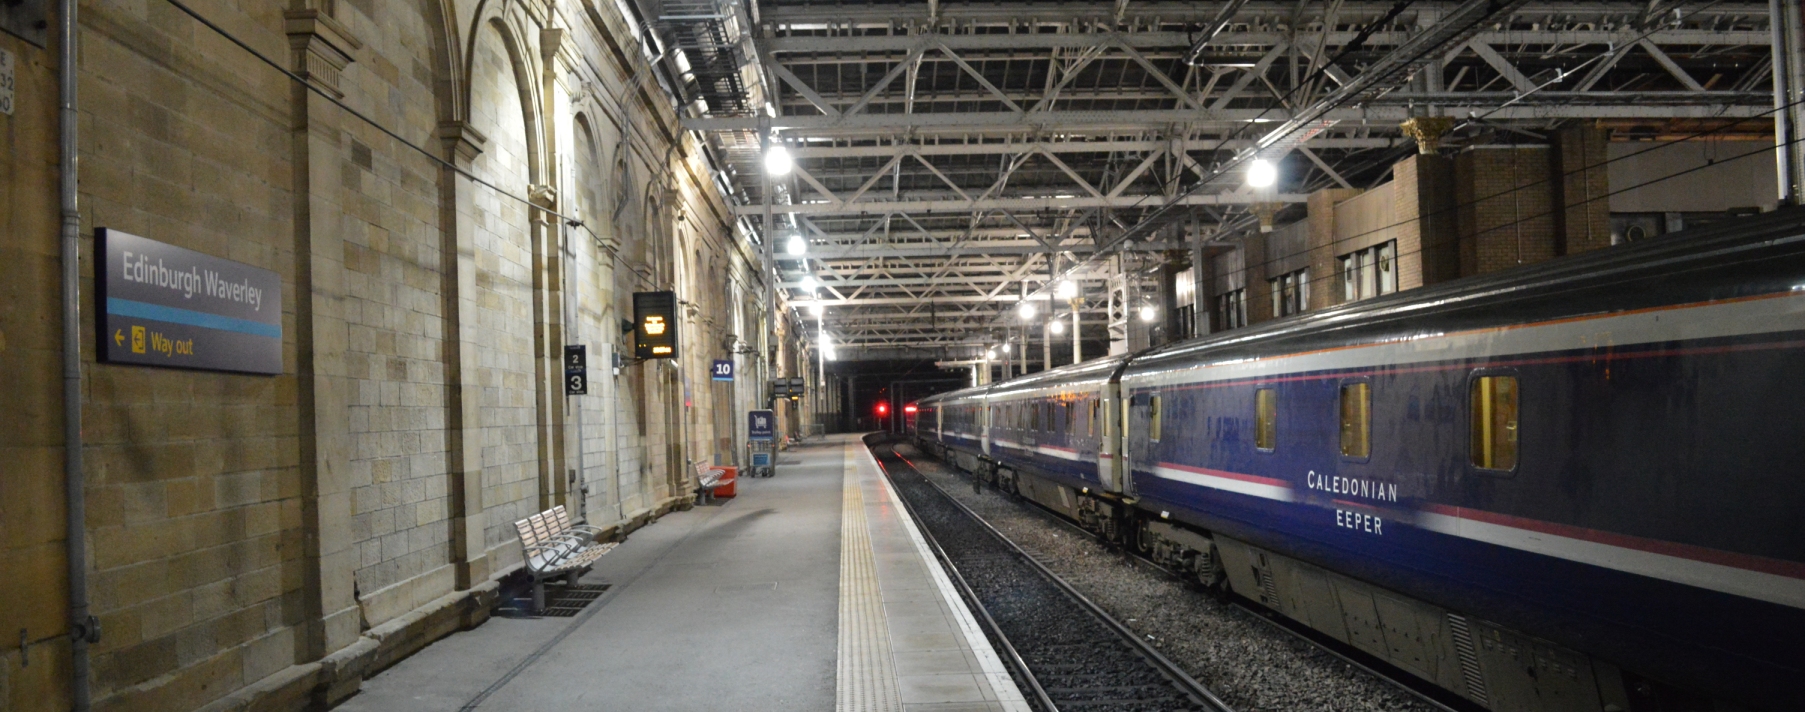 Caledonian Sleeper in Edinburgh Waverley Station ©Noord West Express